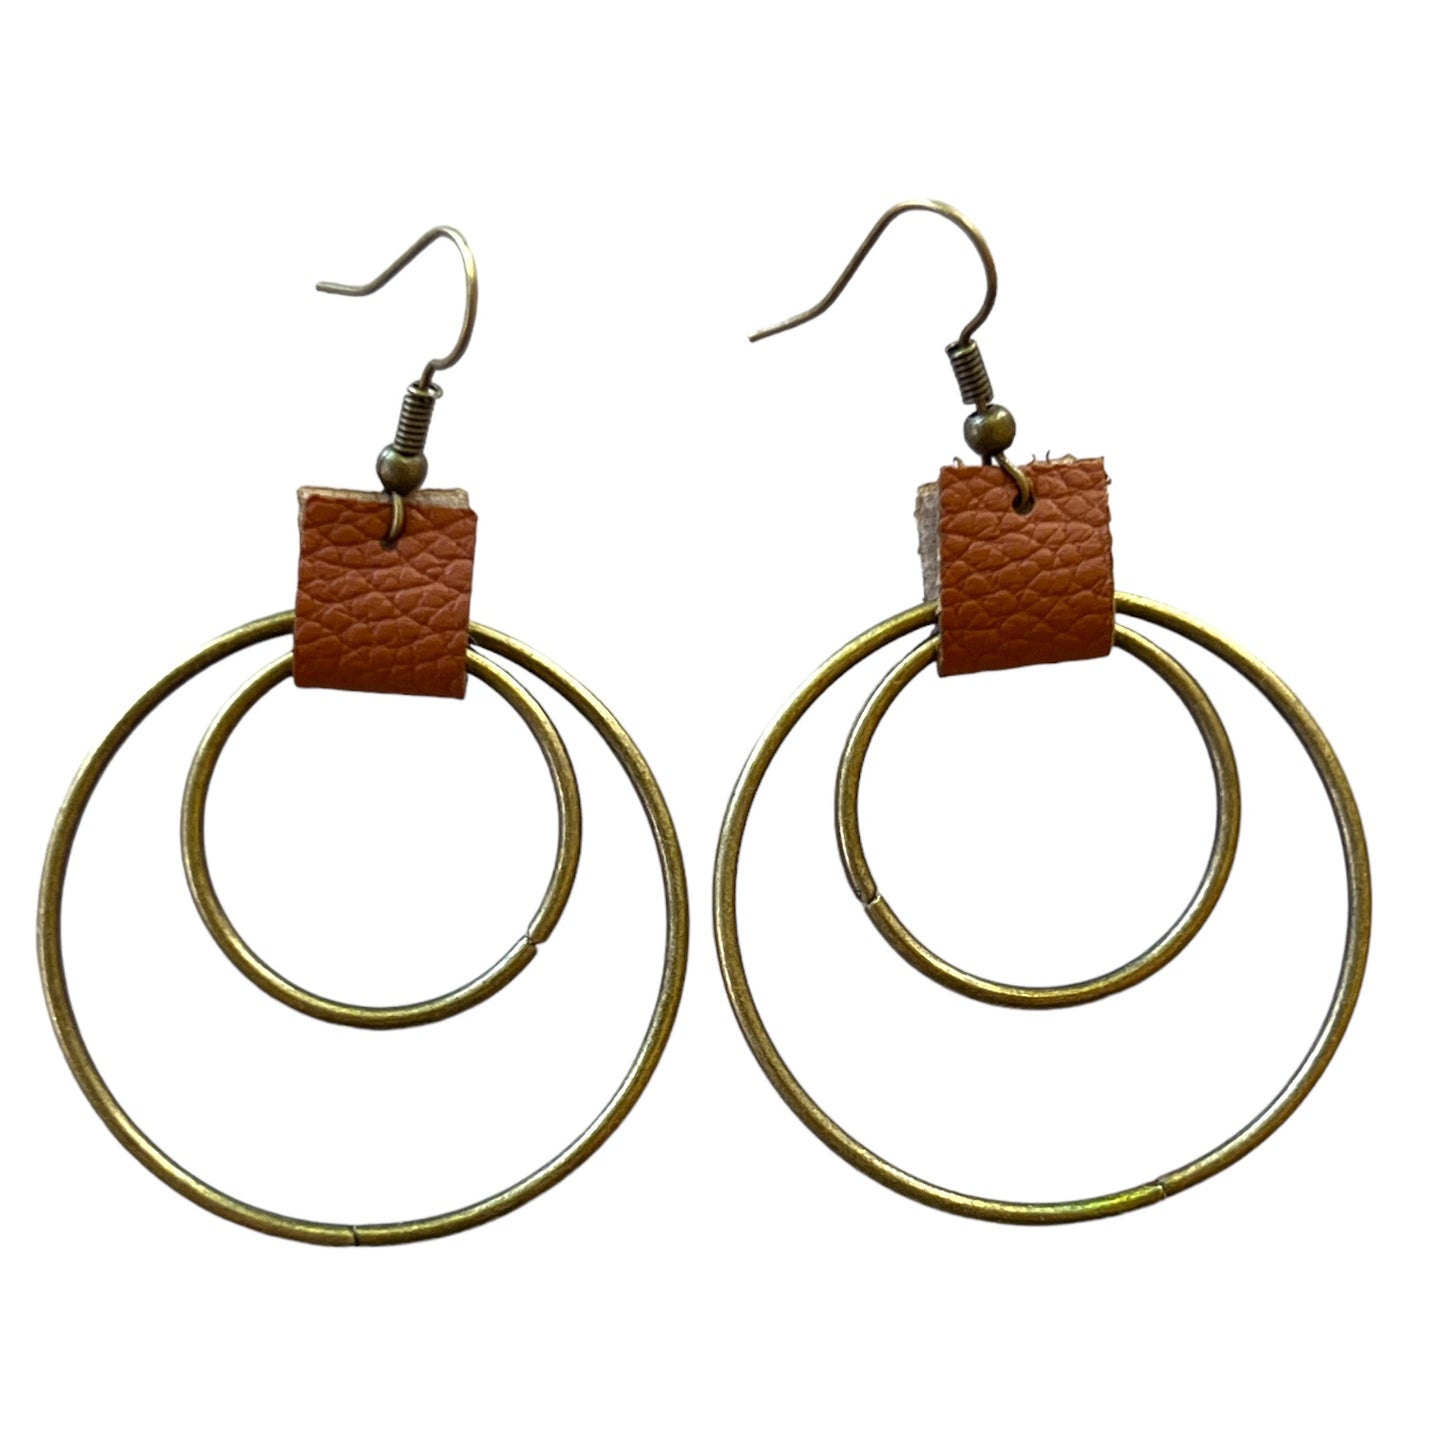 Leather & Brass Double Hoop Earrings: Western Boho Chic Accessories